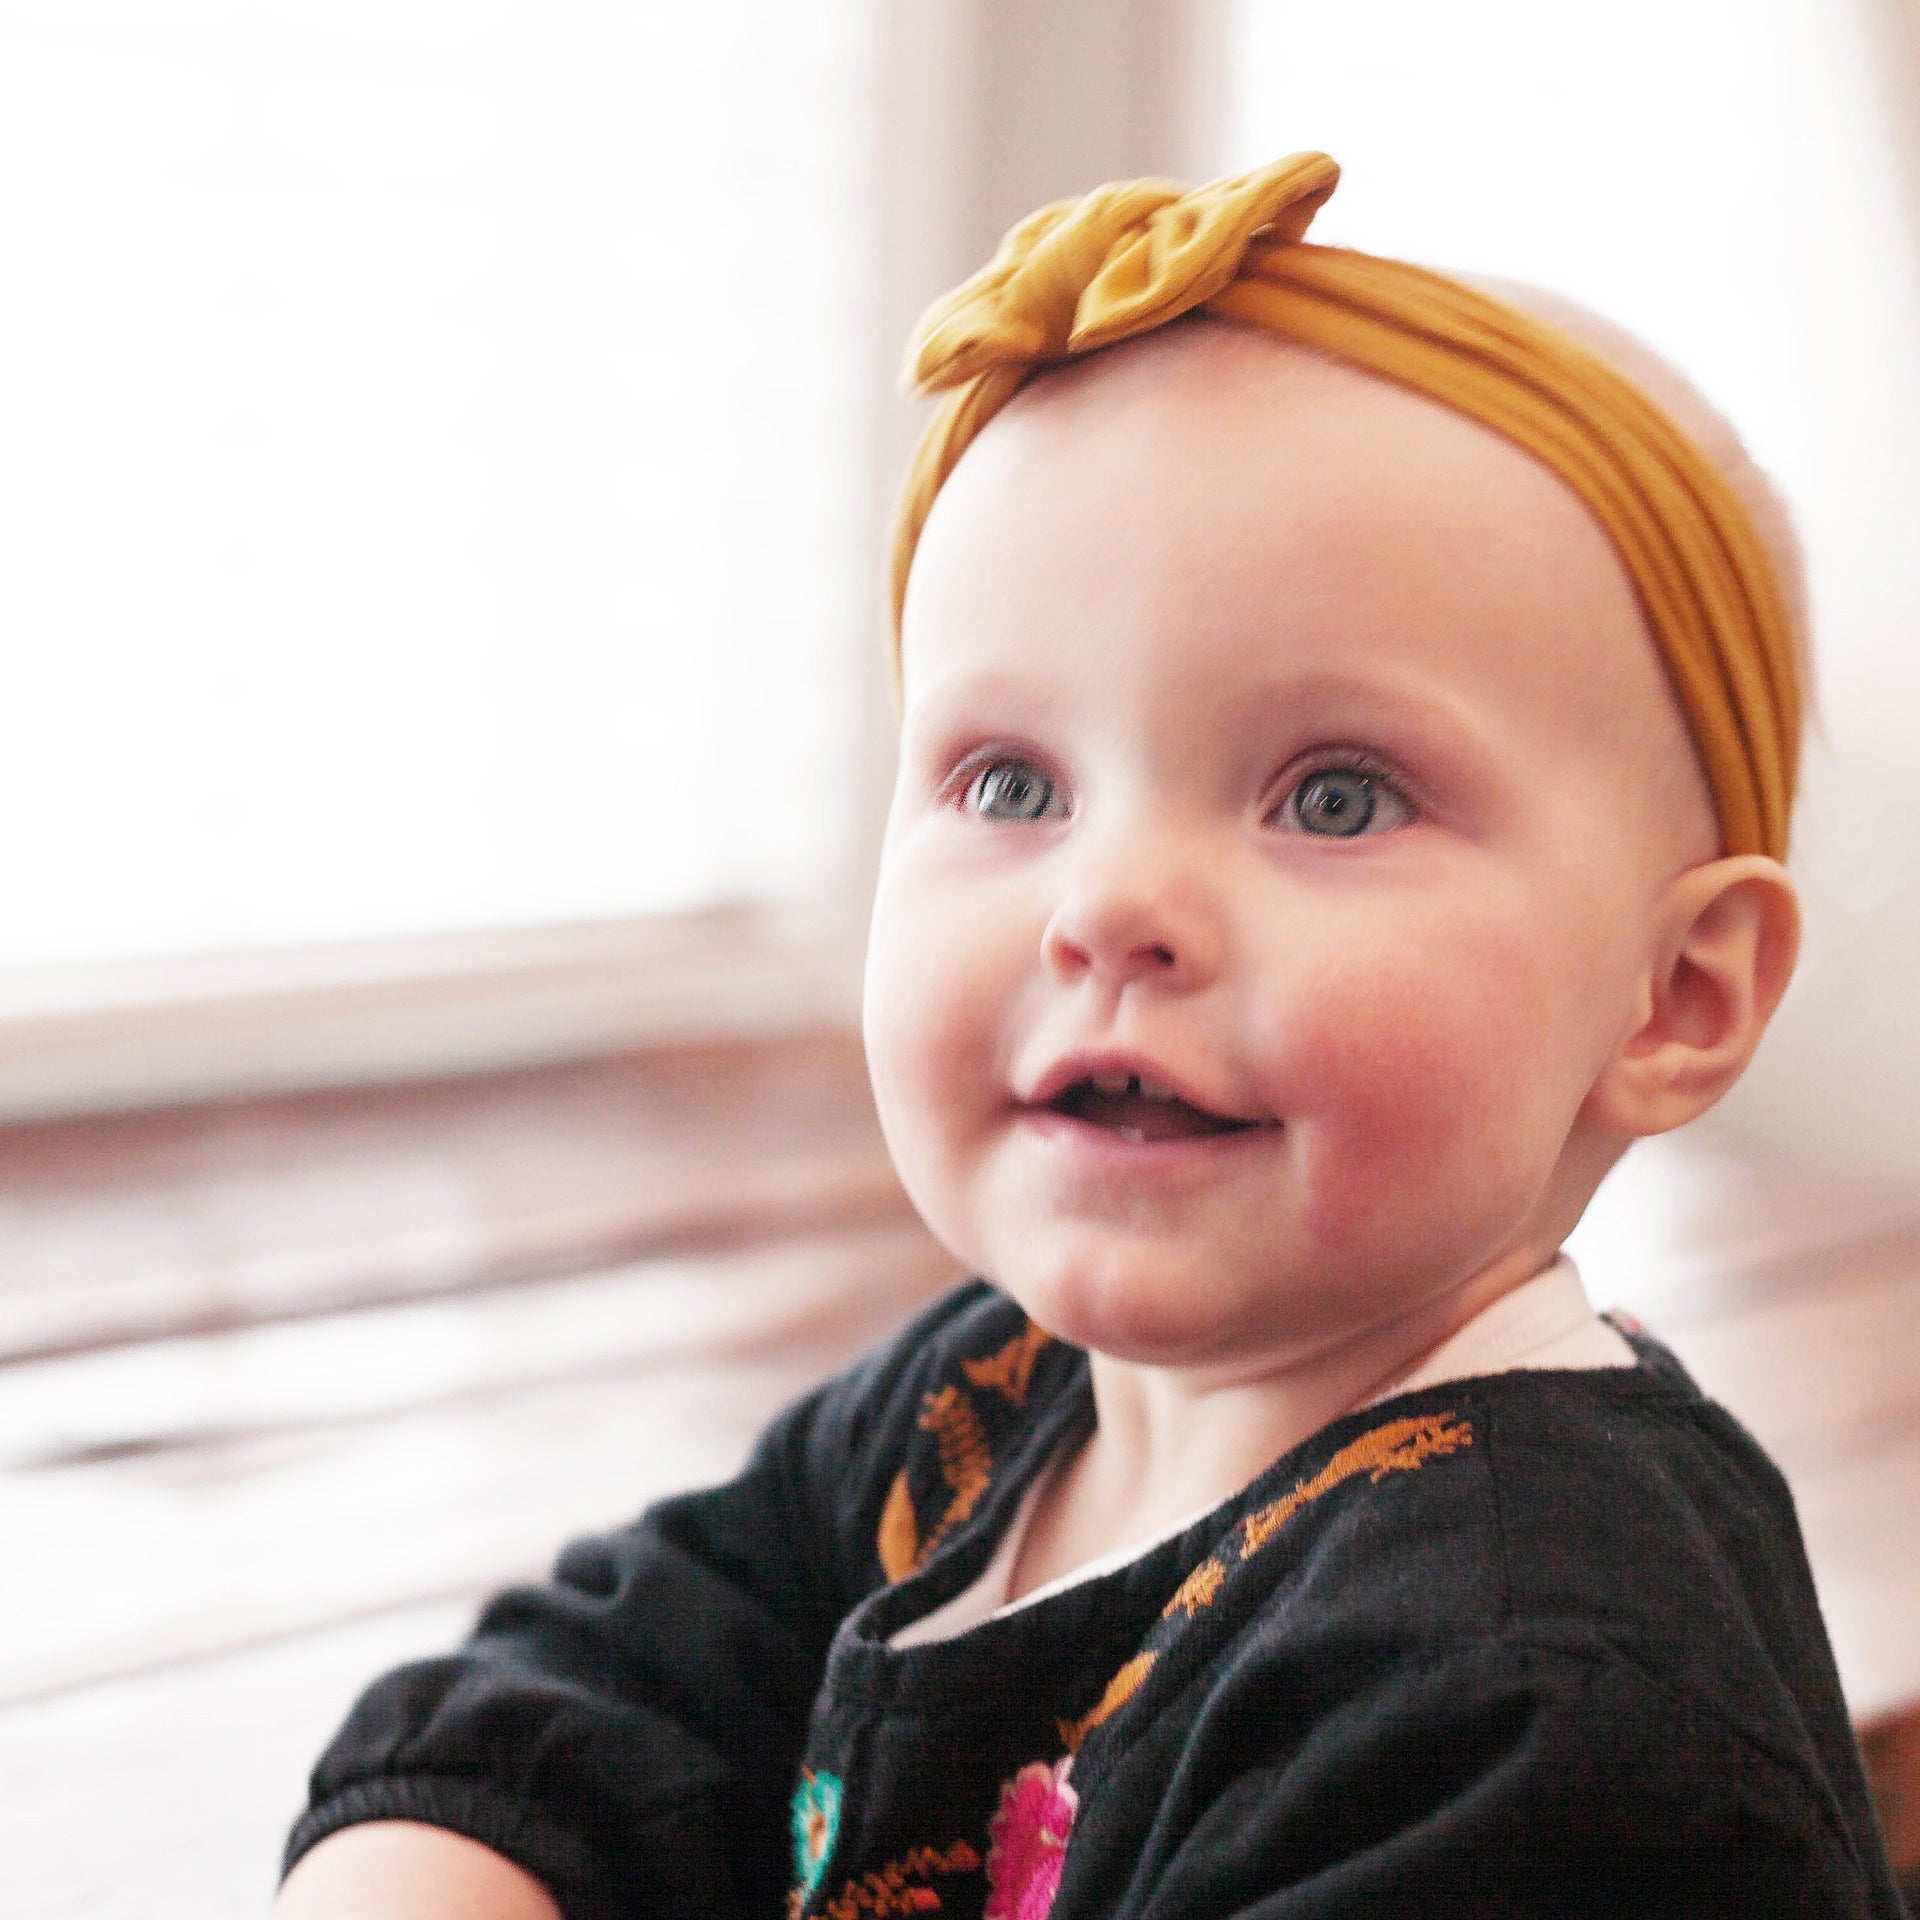 Infant Headwrap Nylon Bow Floral Headband - Violet Bloom Baby Wisp